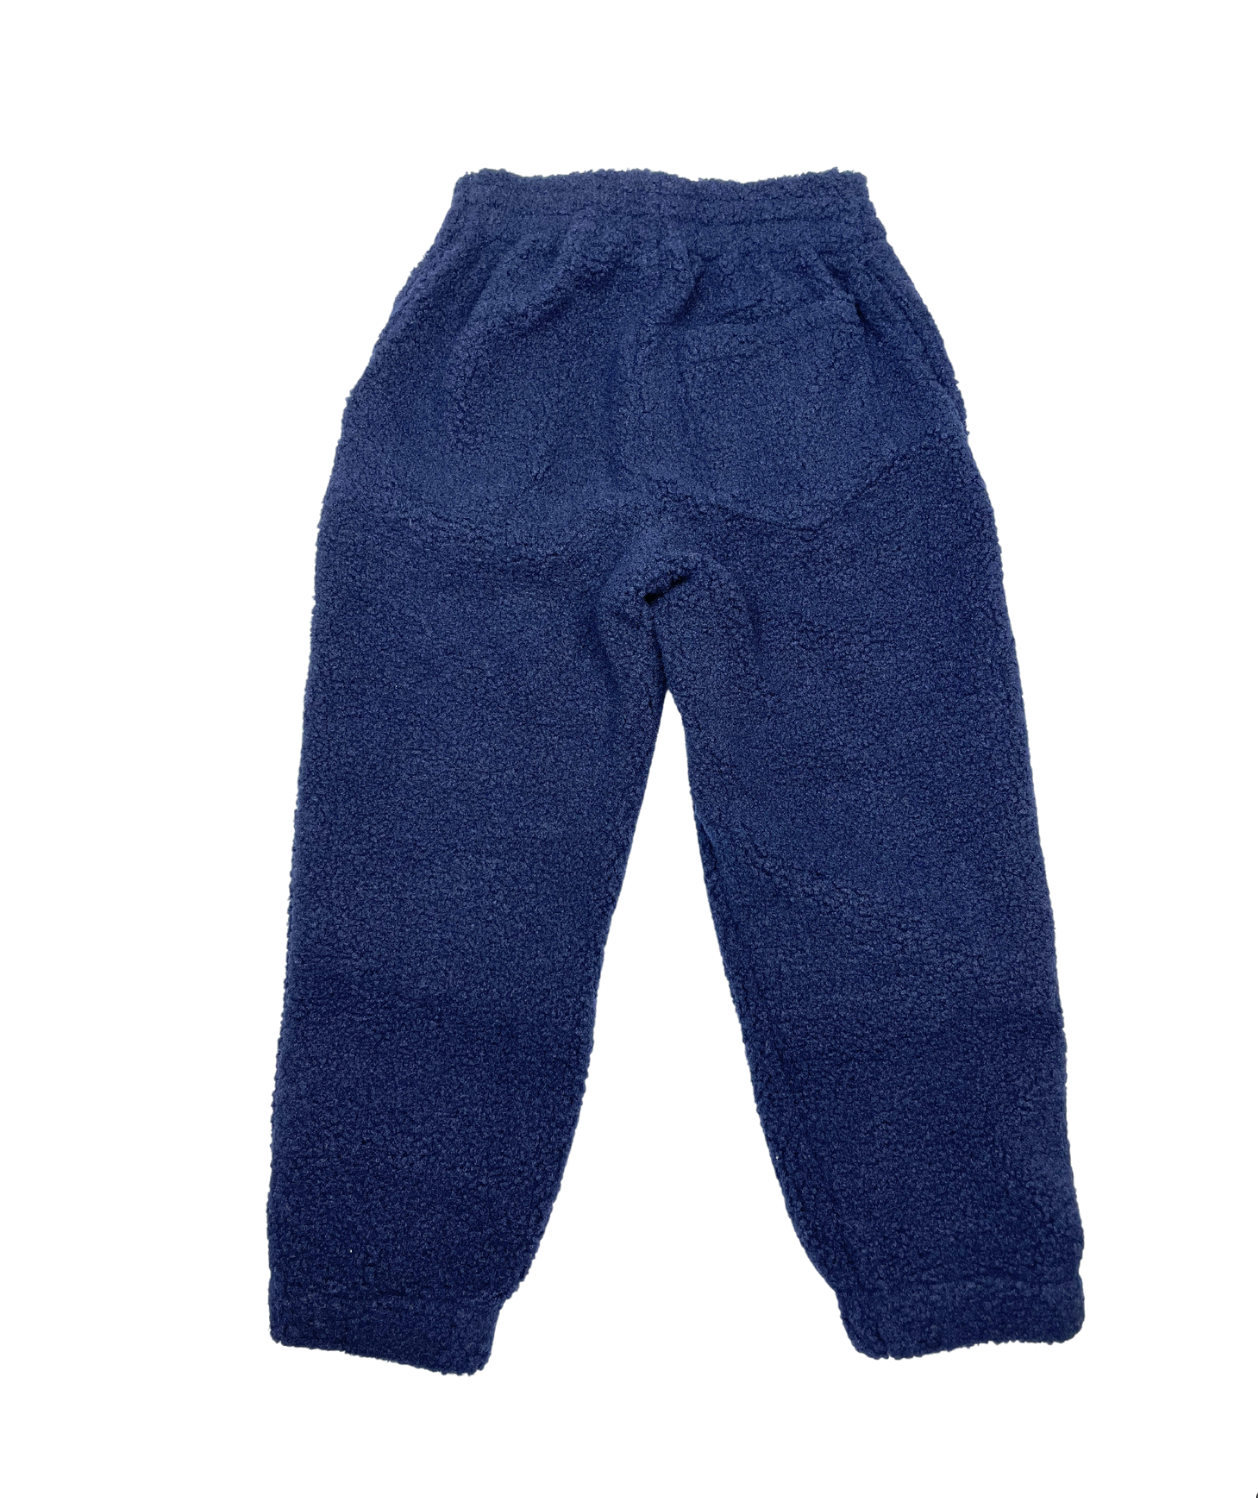 FINGER IN THE NOSE - Pantalon moumoute bleu - 10/11 ans